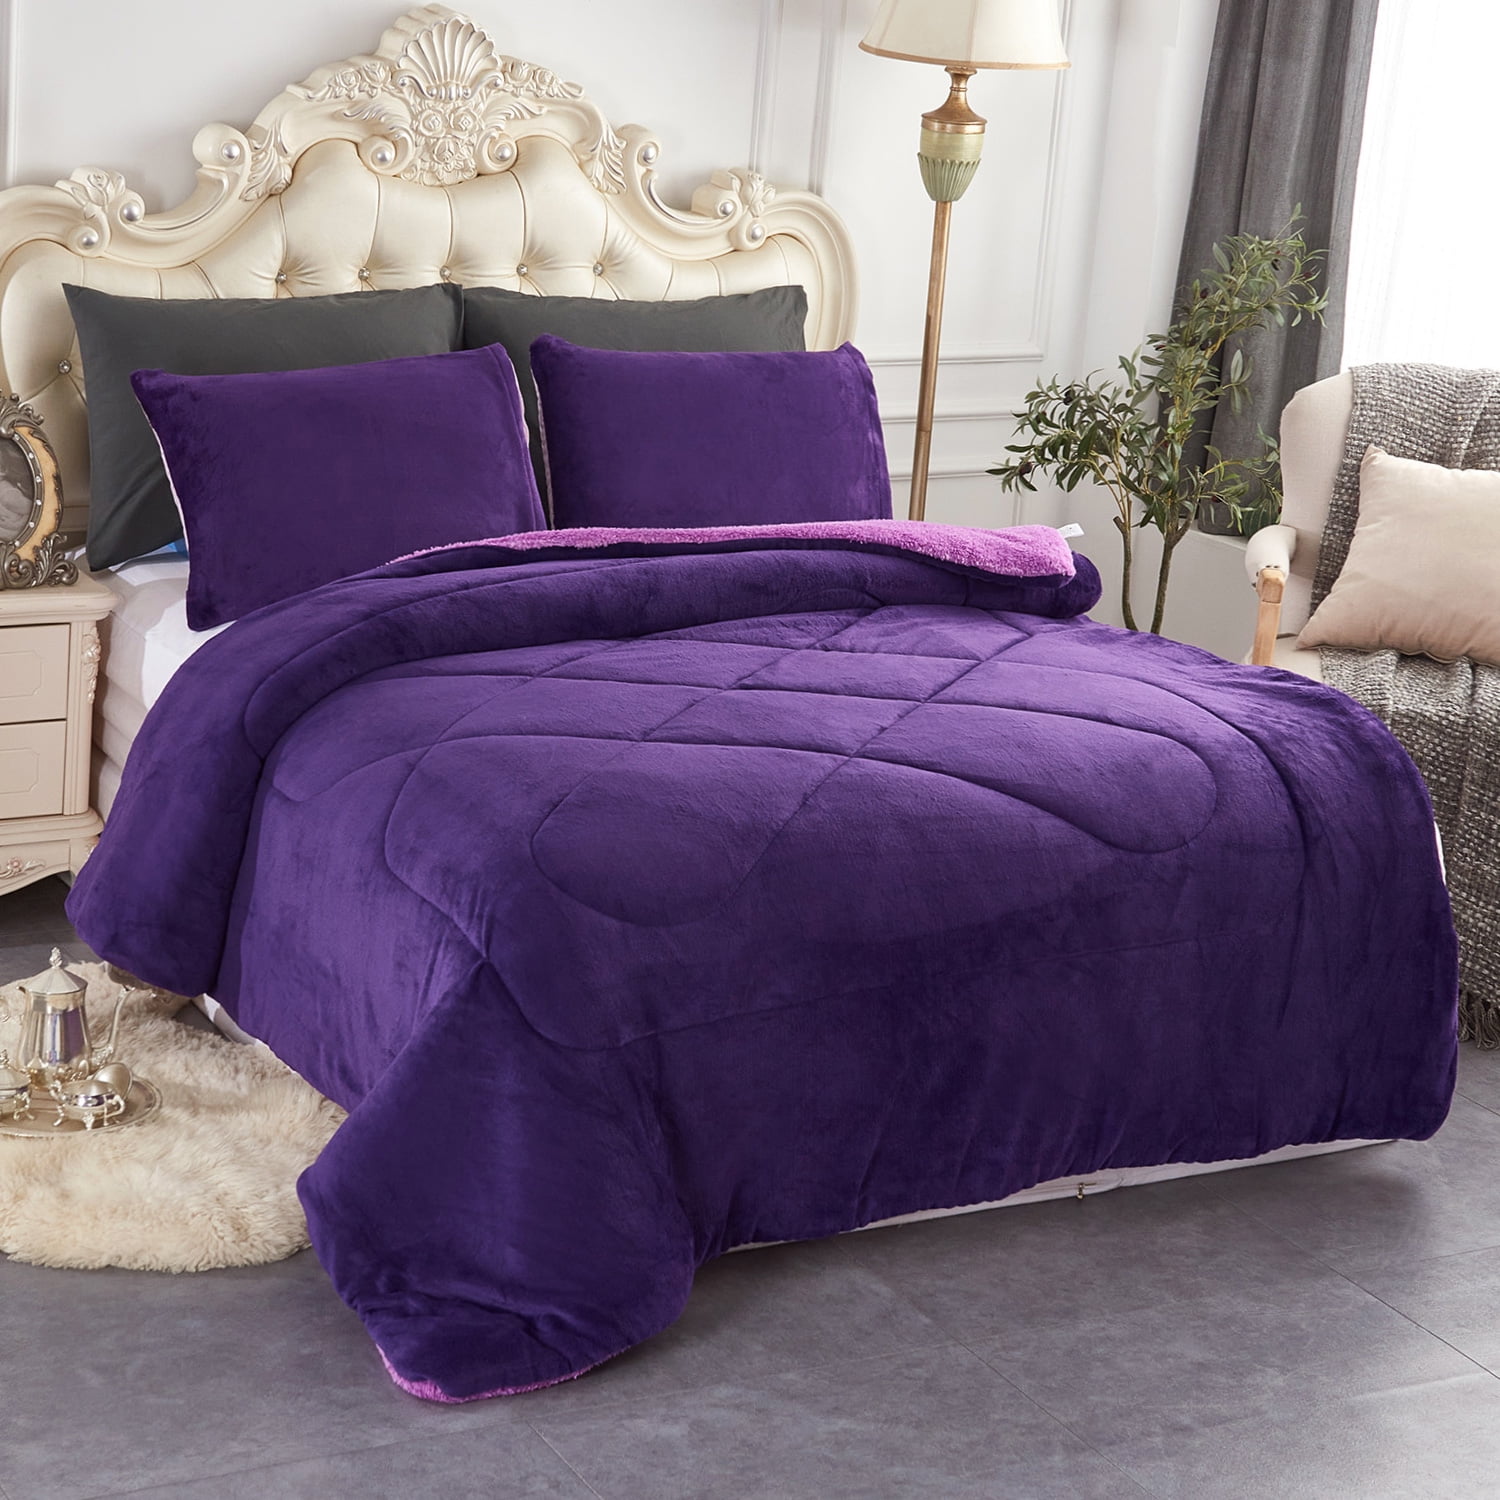 JML Sherpa Fleece Bed Blanket King 3 Pieces,Thick Warm Blanket,Purple,79 x  91,6.5lb